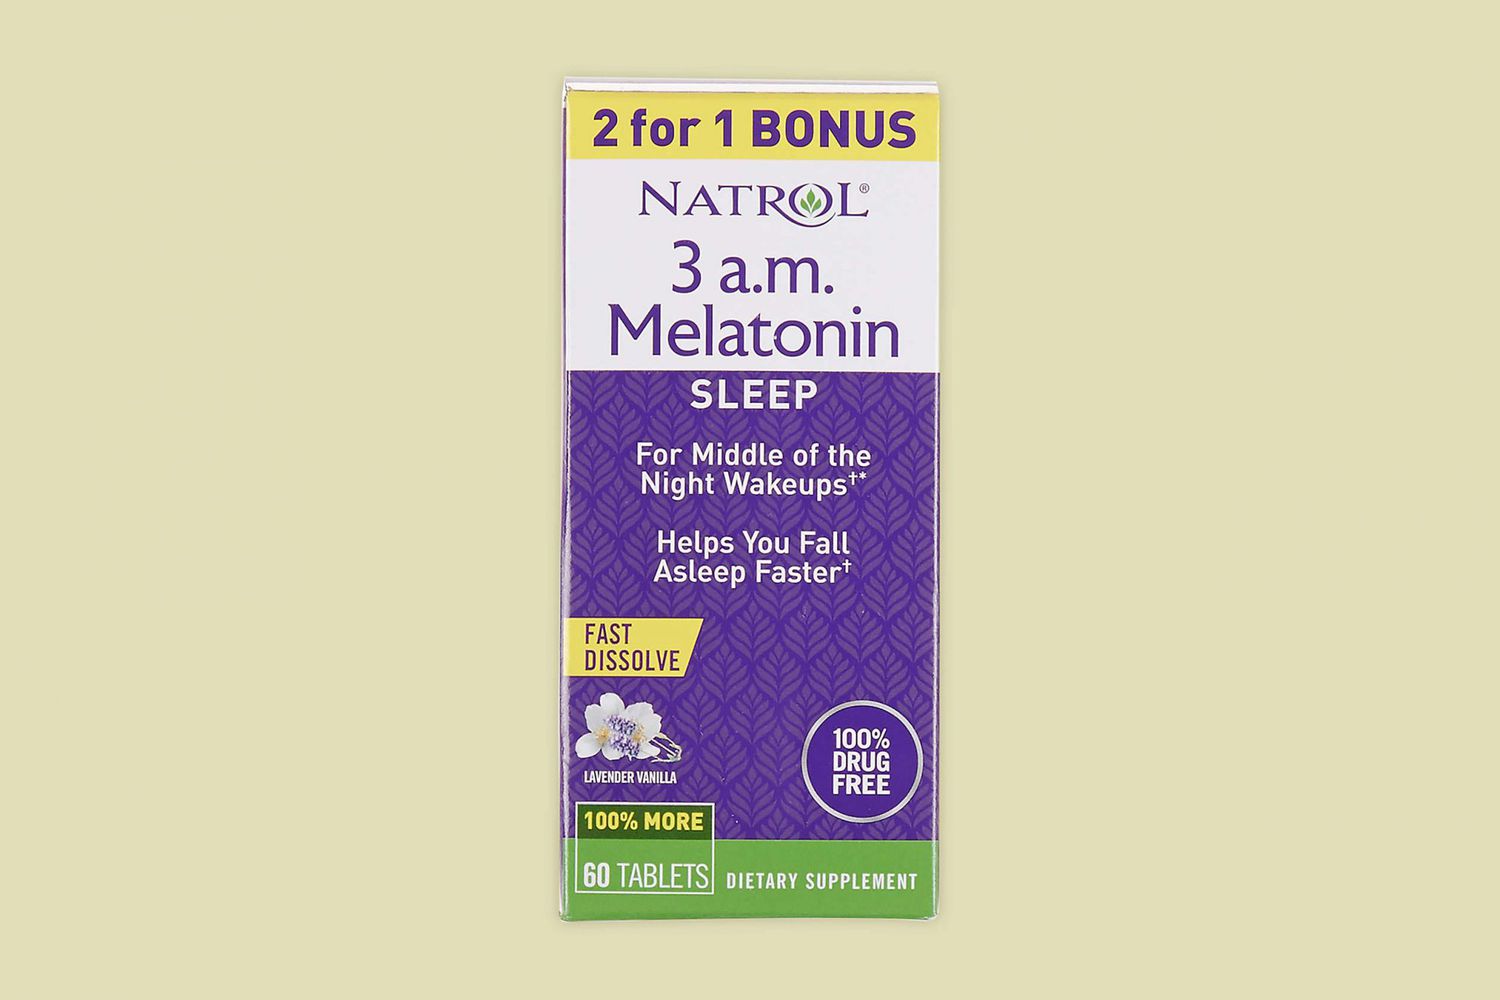 Natrol 3 a.m. Melatonin